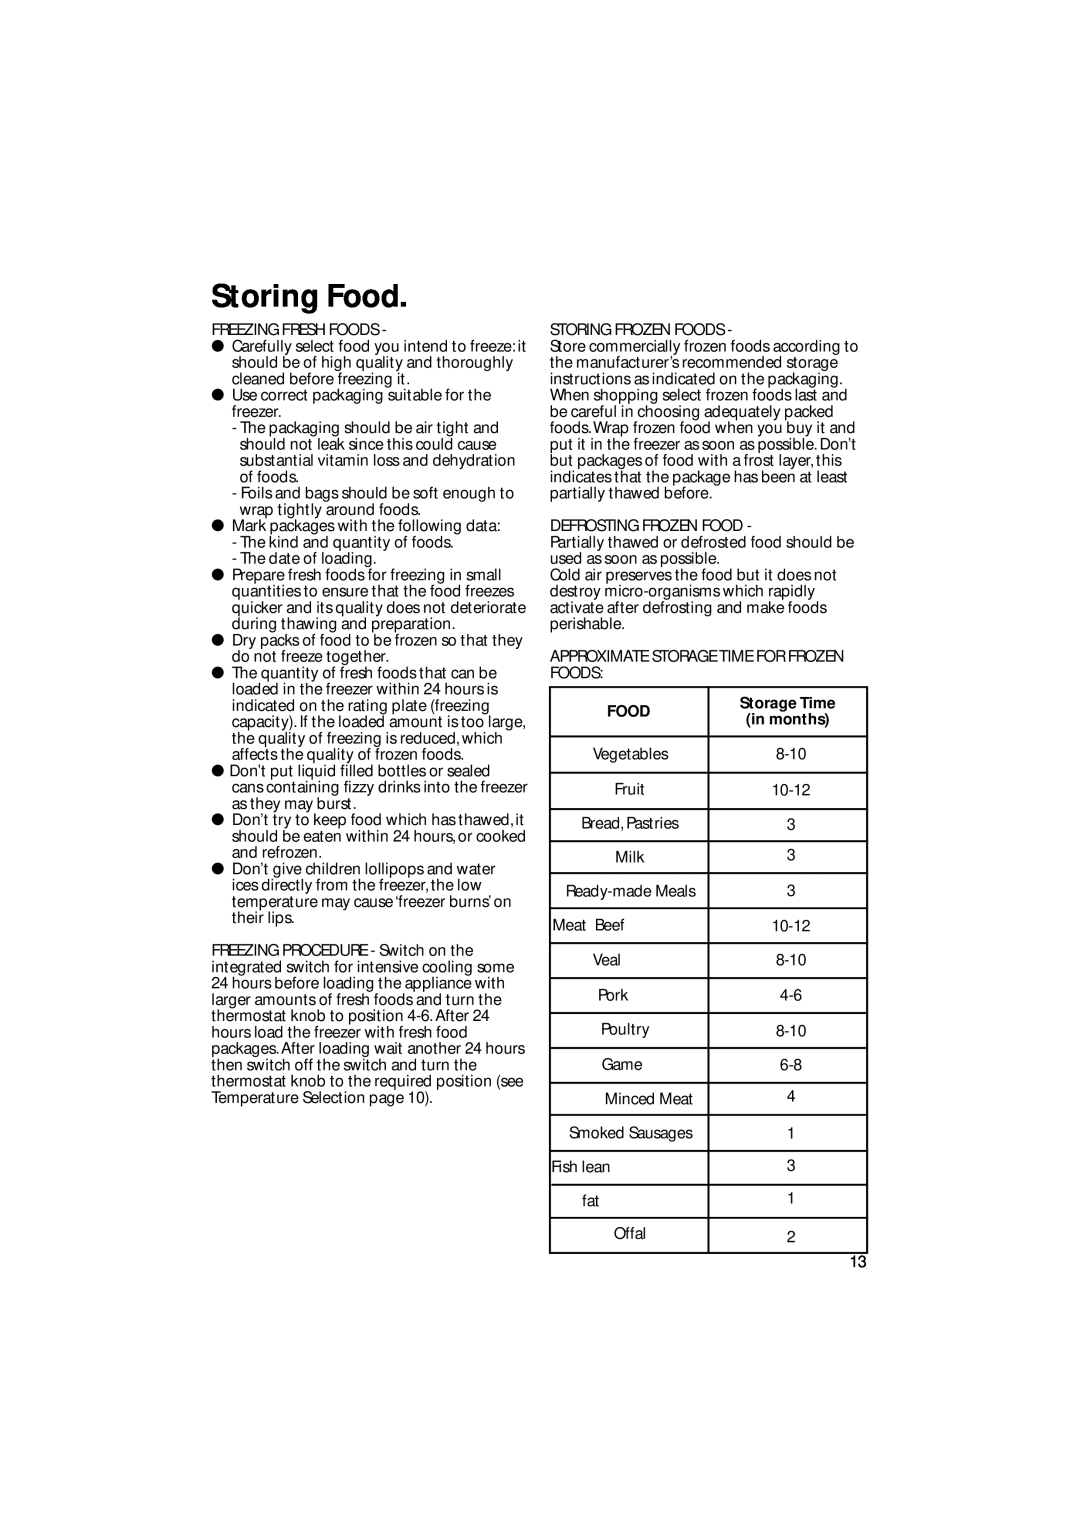 Hotpoint BM10, BM21 manual Storing Food, Storage Time 